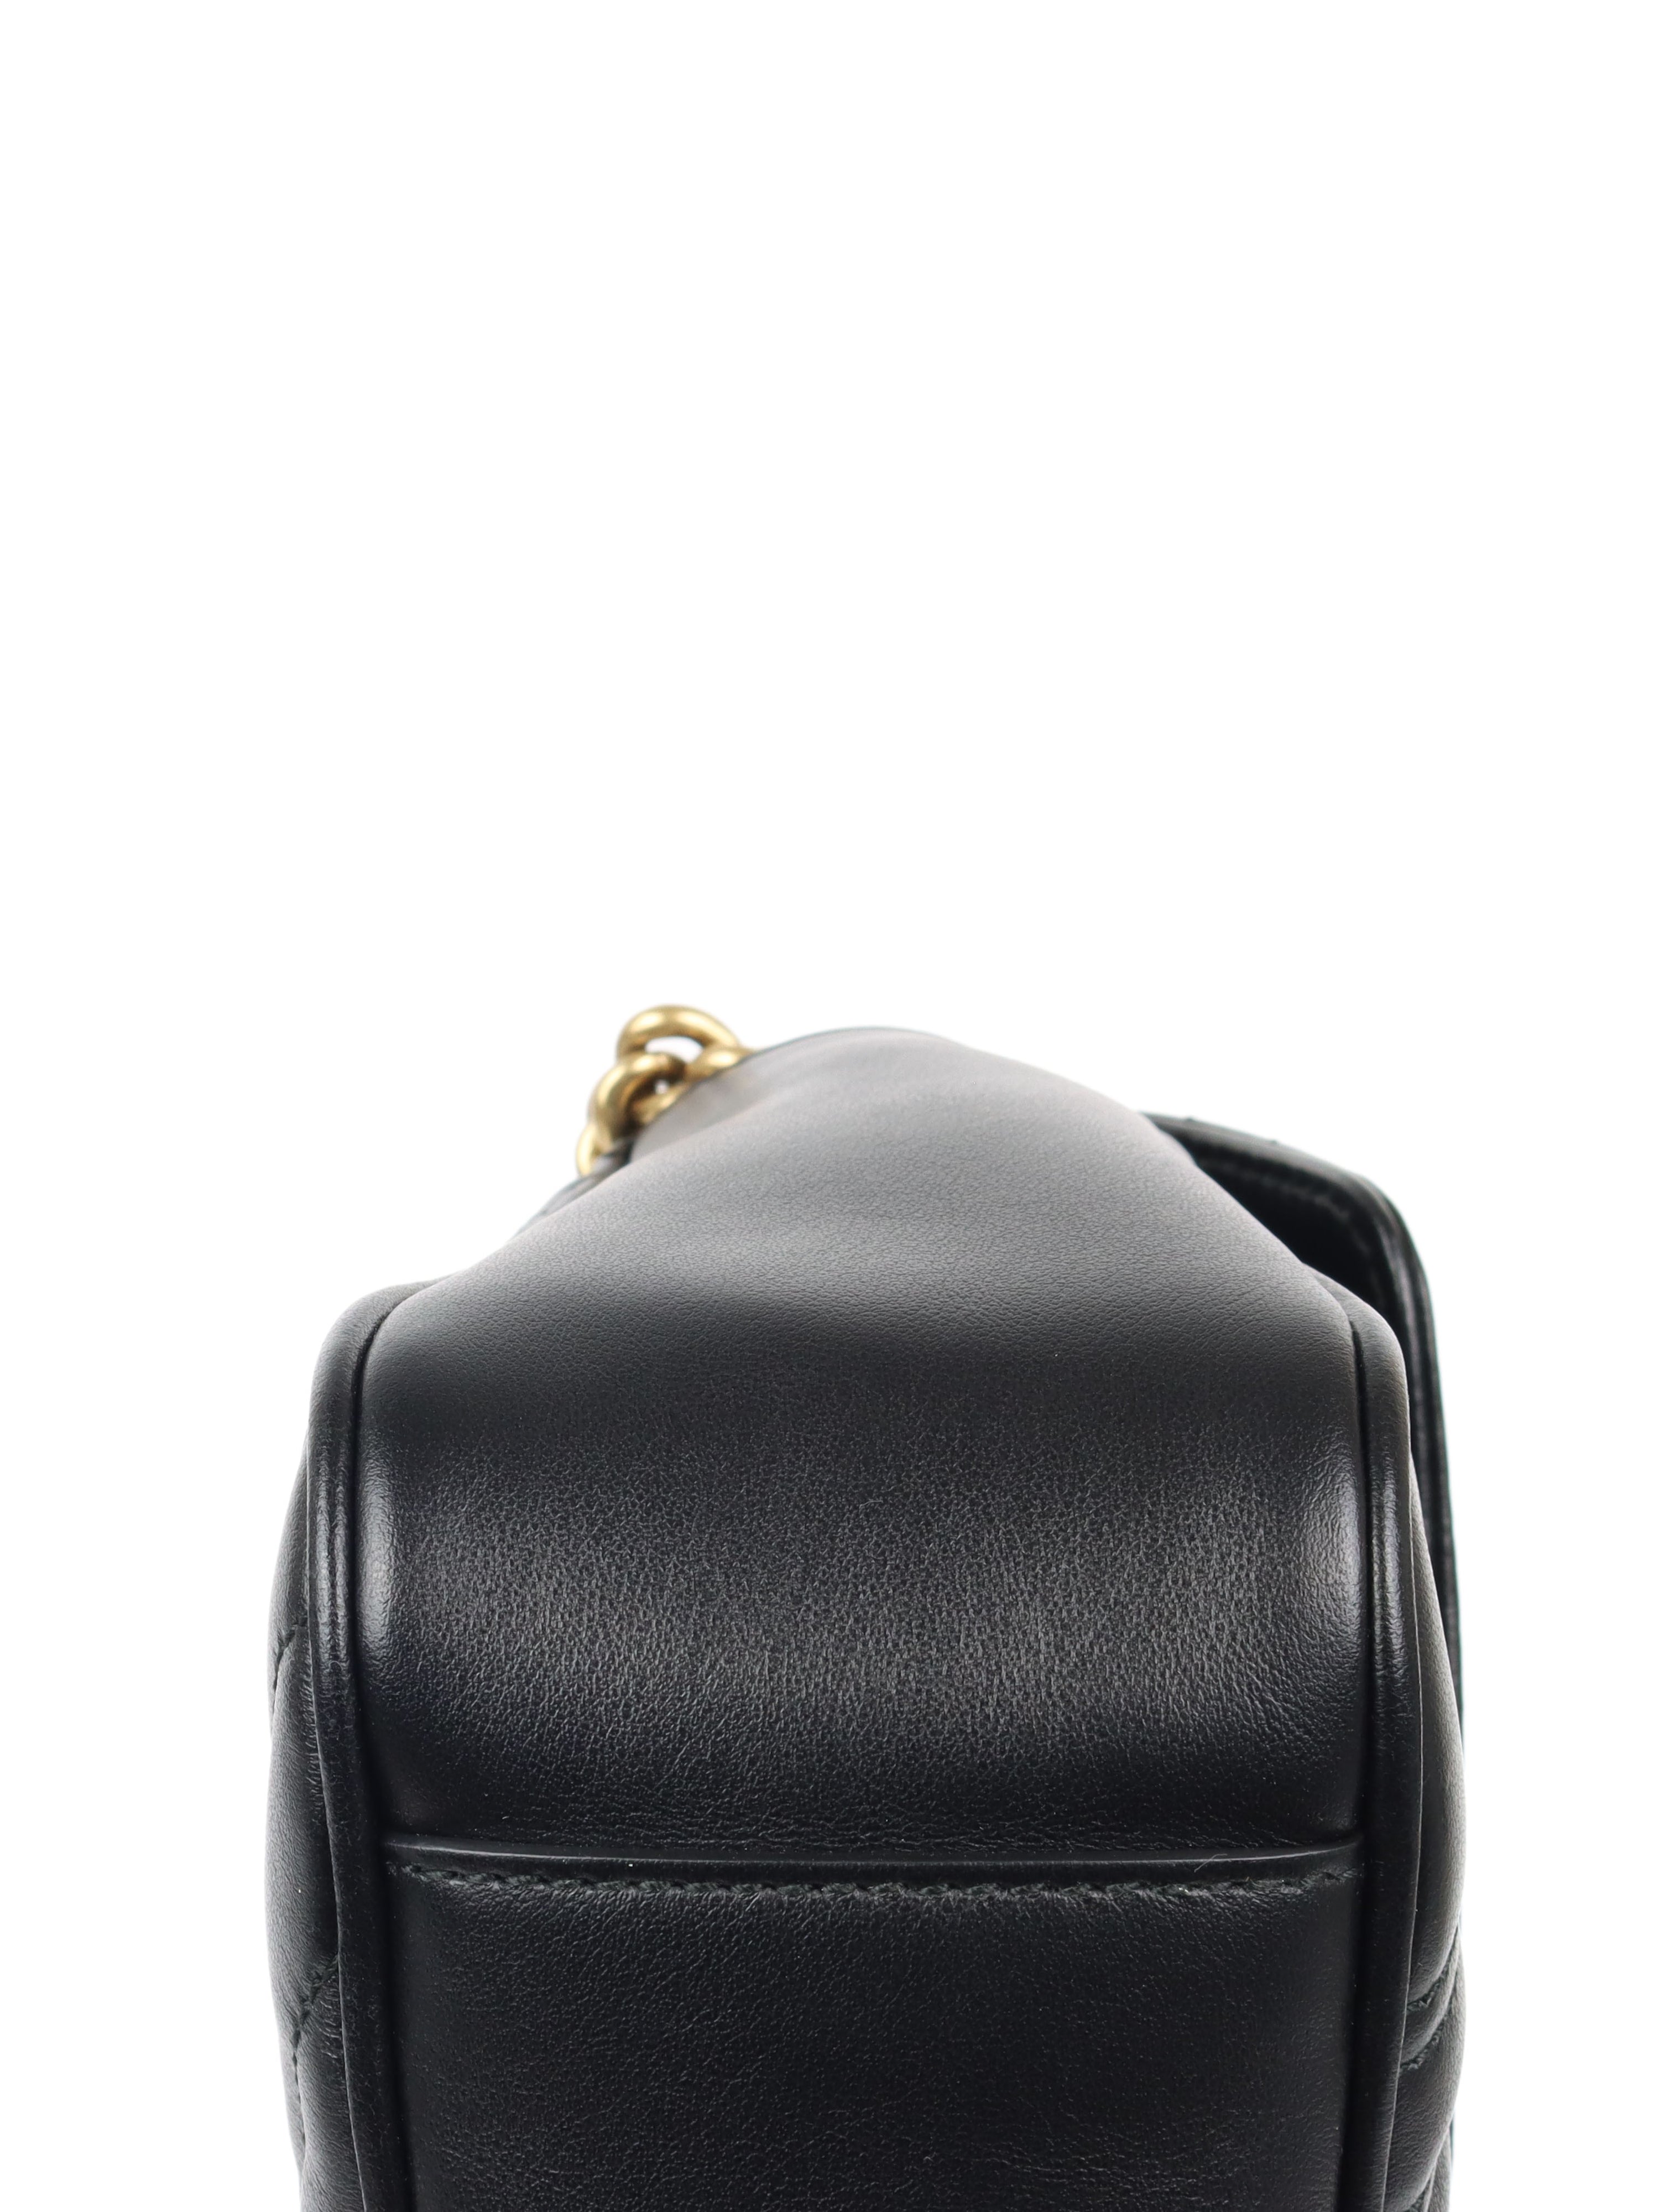 Gucci Small Black GG Marmont Bag